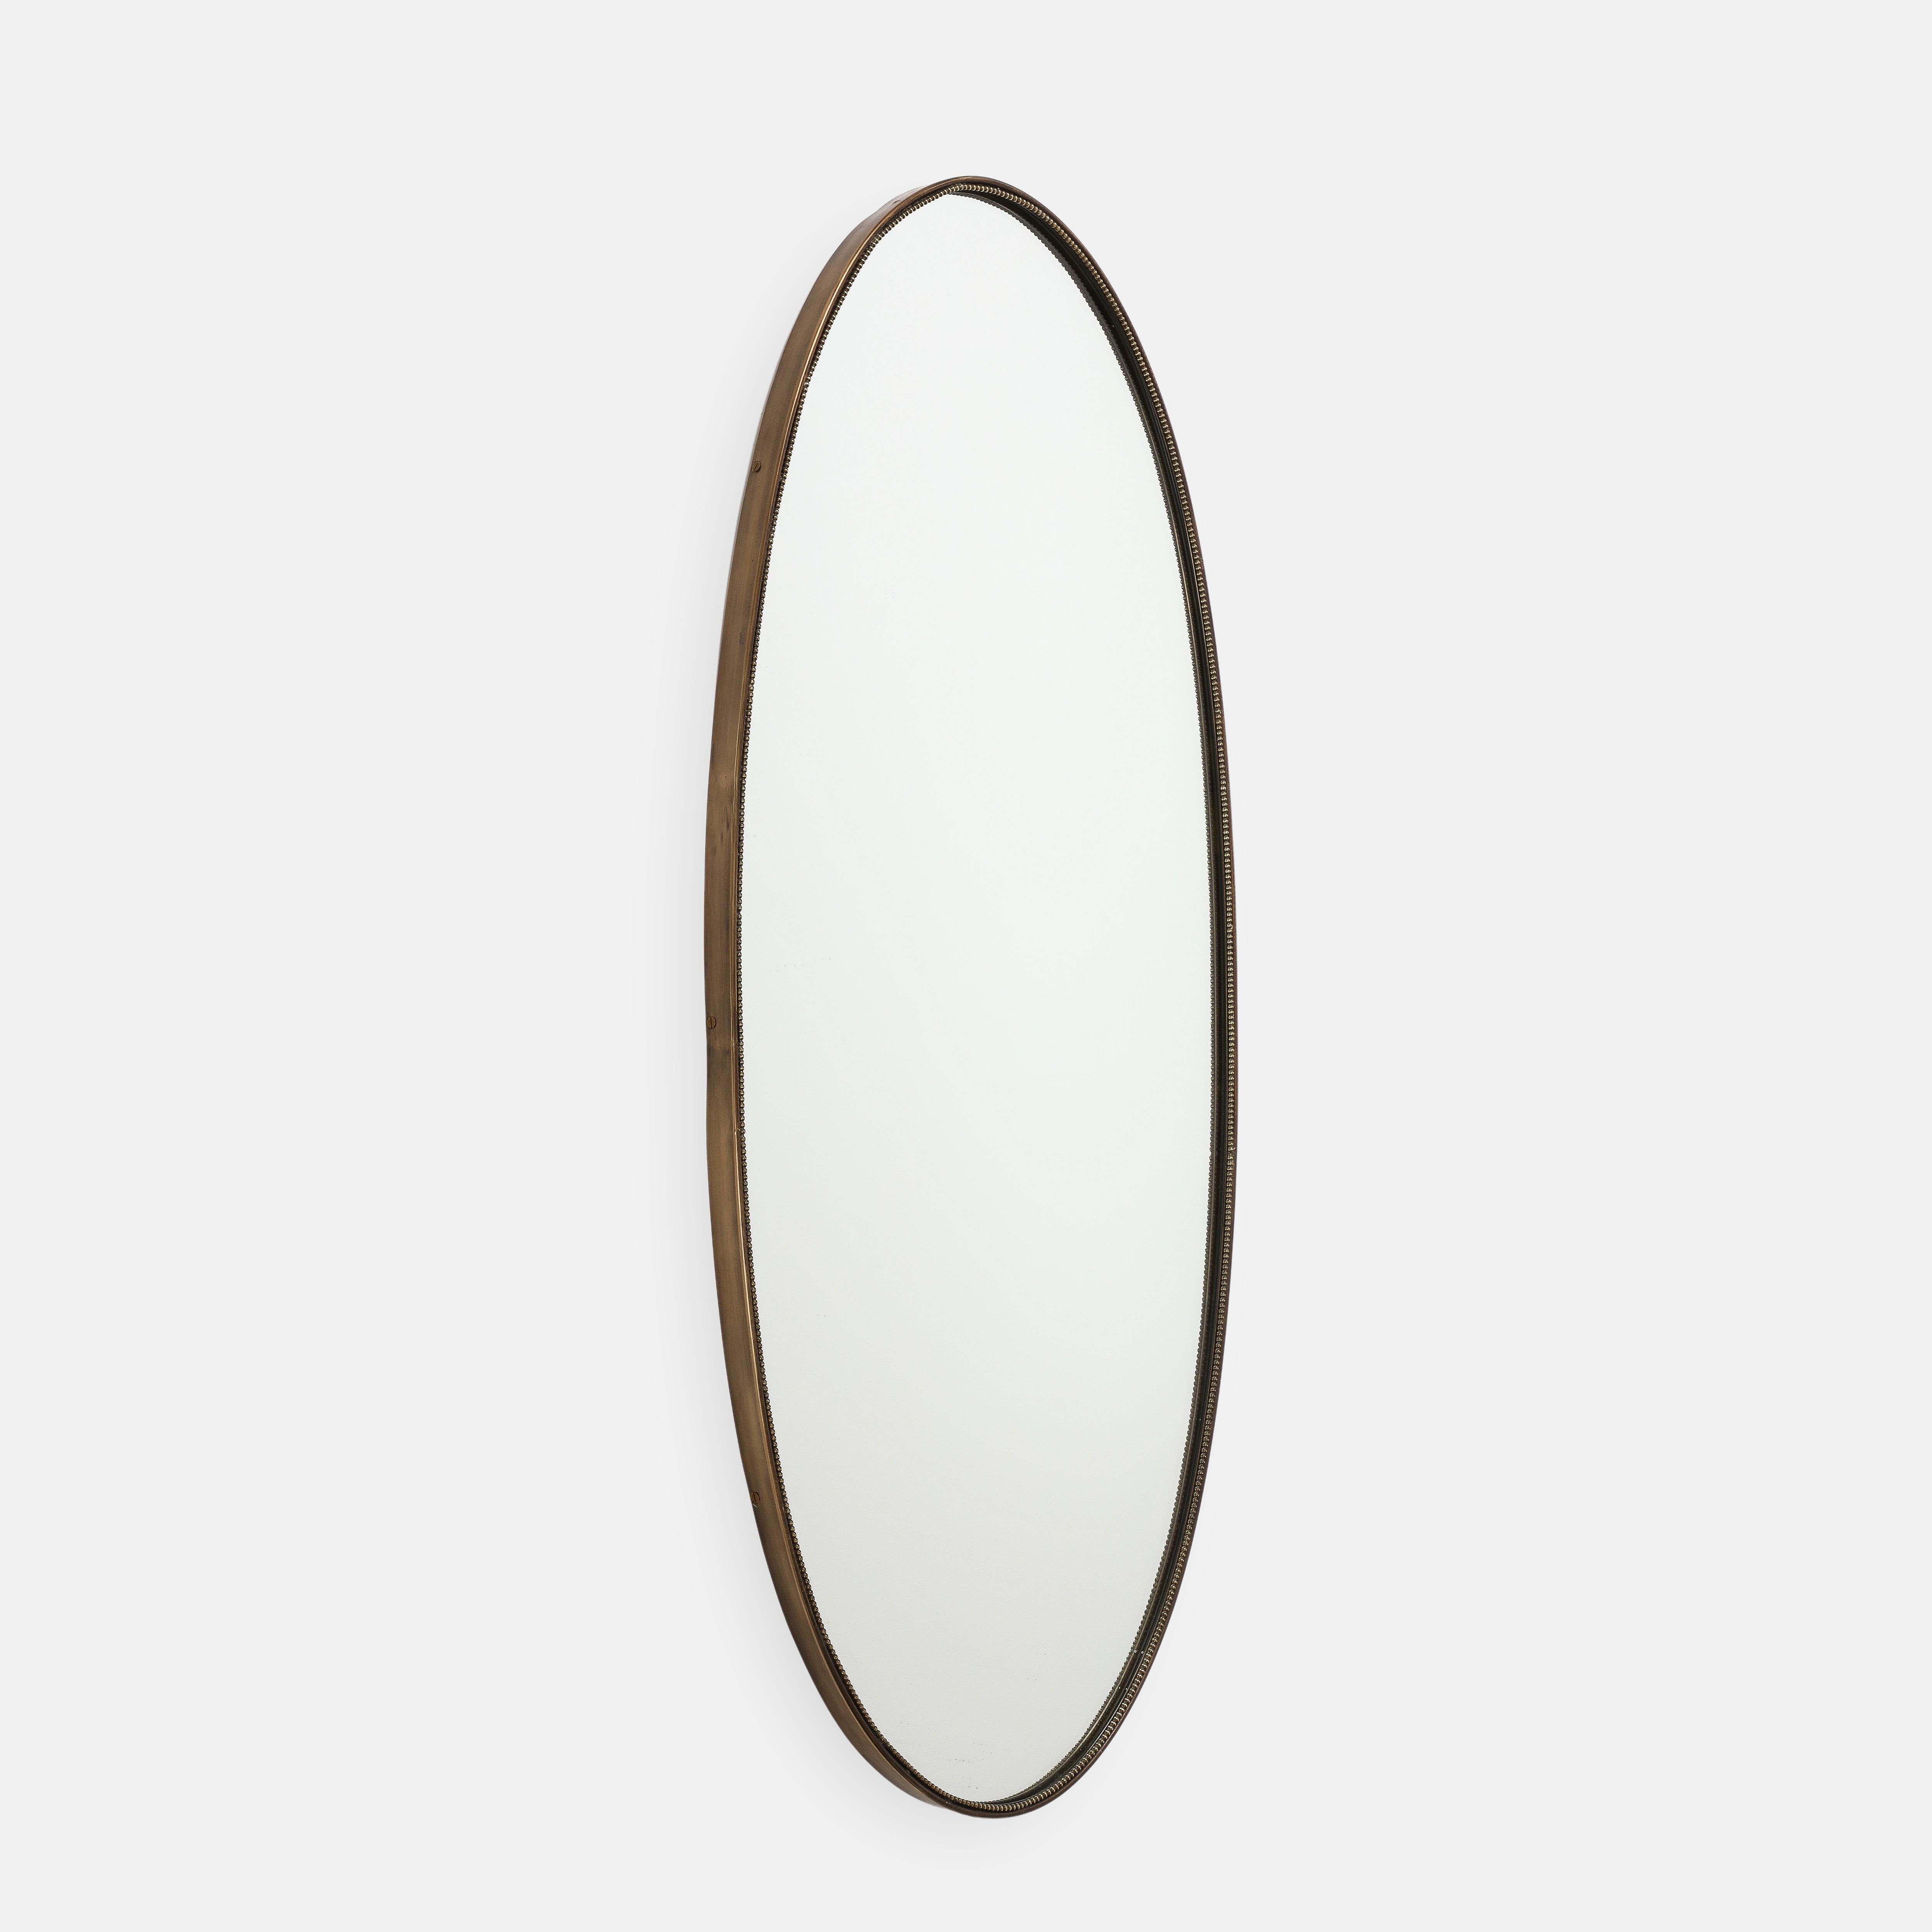 Midcentury Italian classic oval wall mirror with elegant beaded brass trim frame, 1950s